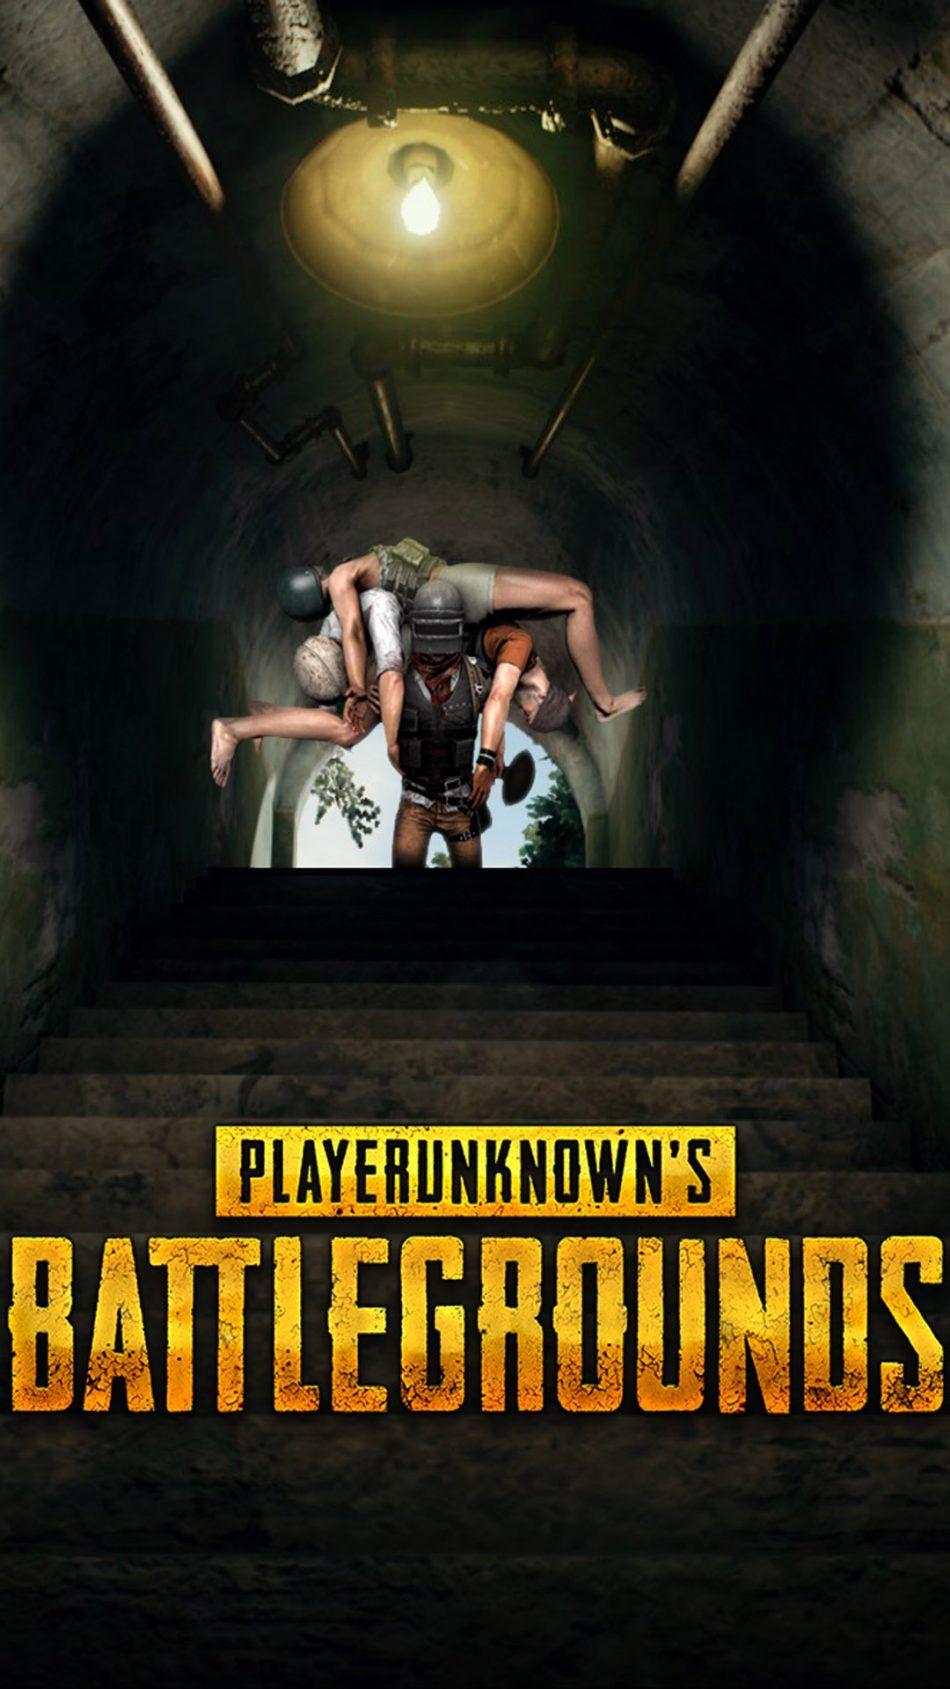 Saving Teammates PlayerUnknown's Battlegrounds (PUBG)